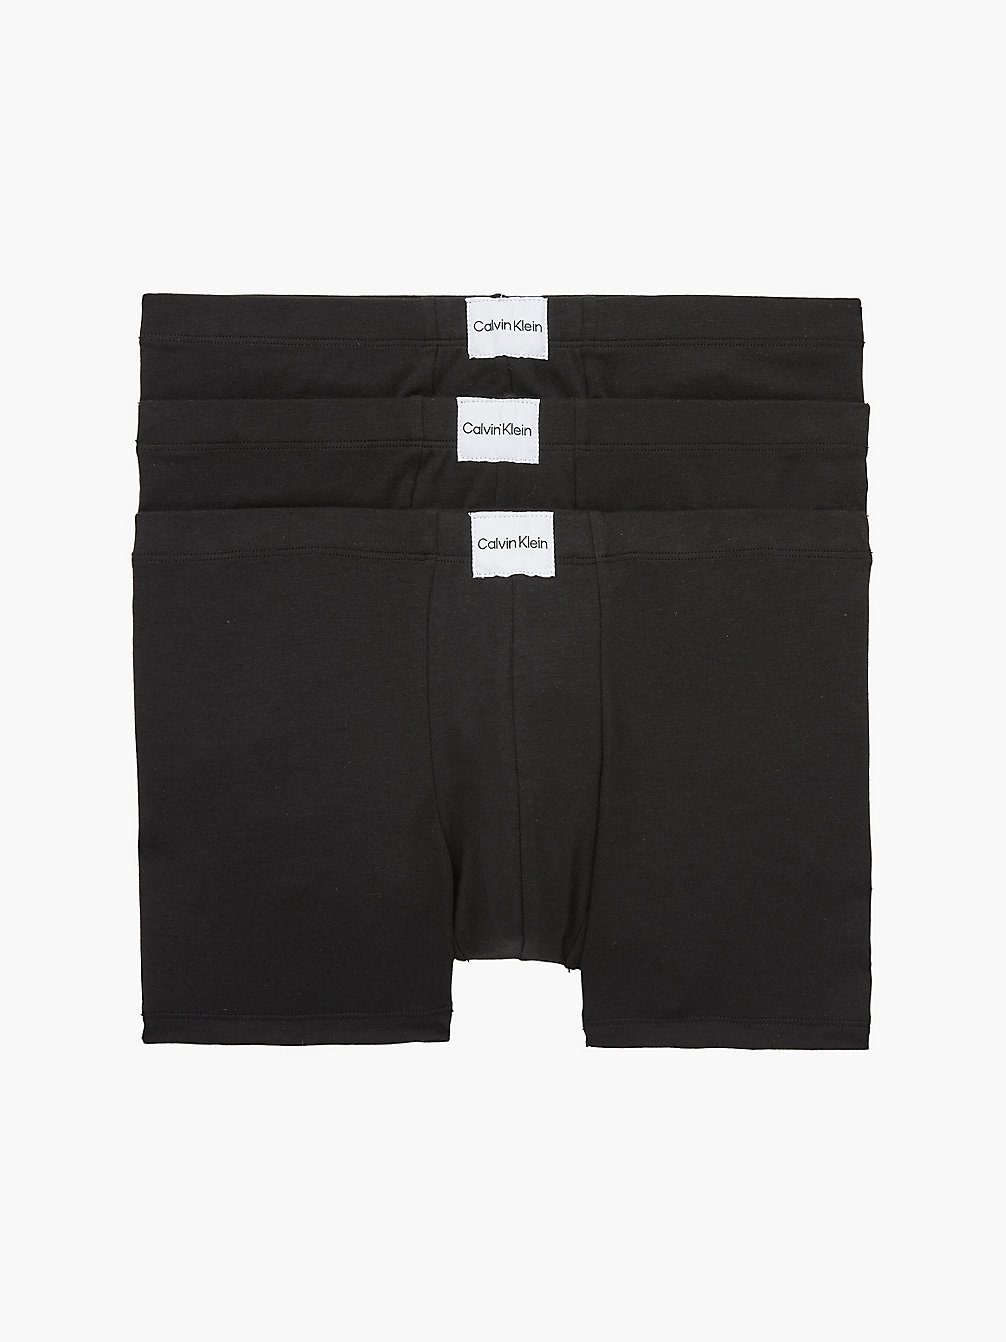 BLACK/BLACK/BLACK 3er-Pack Boxershorts – Pure Cotton undefined Herren Calvin Klein